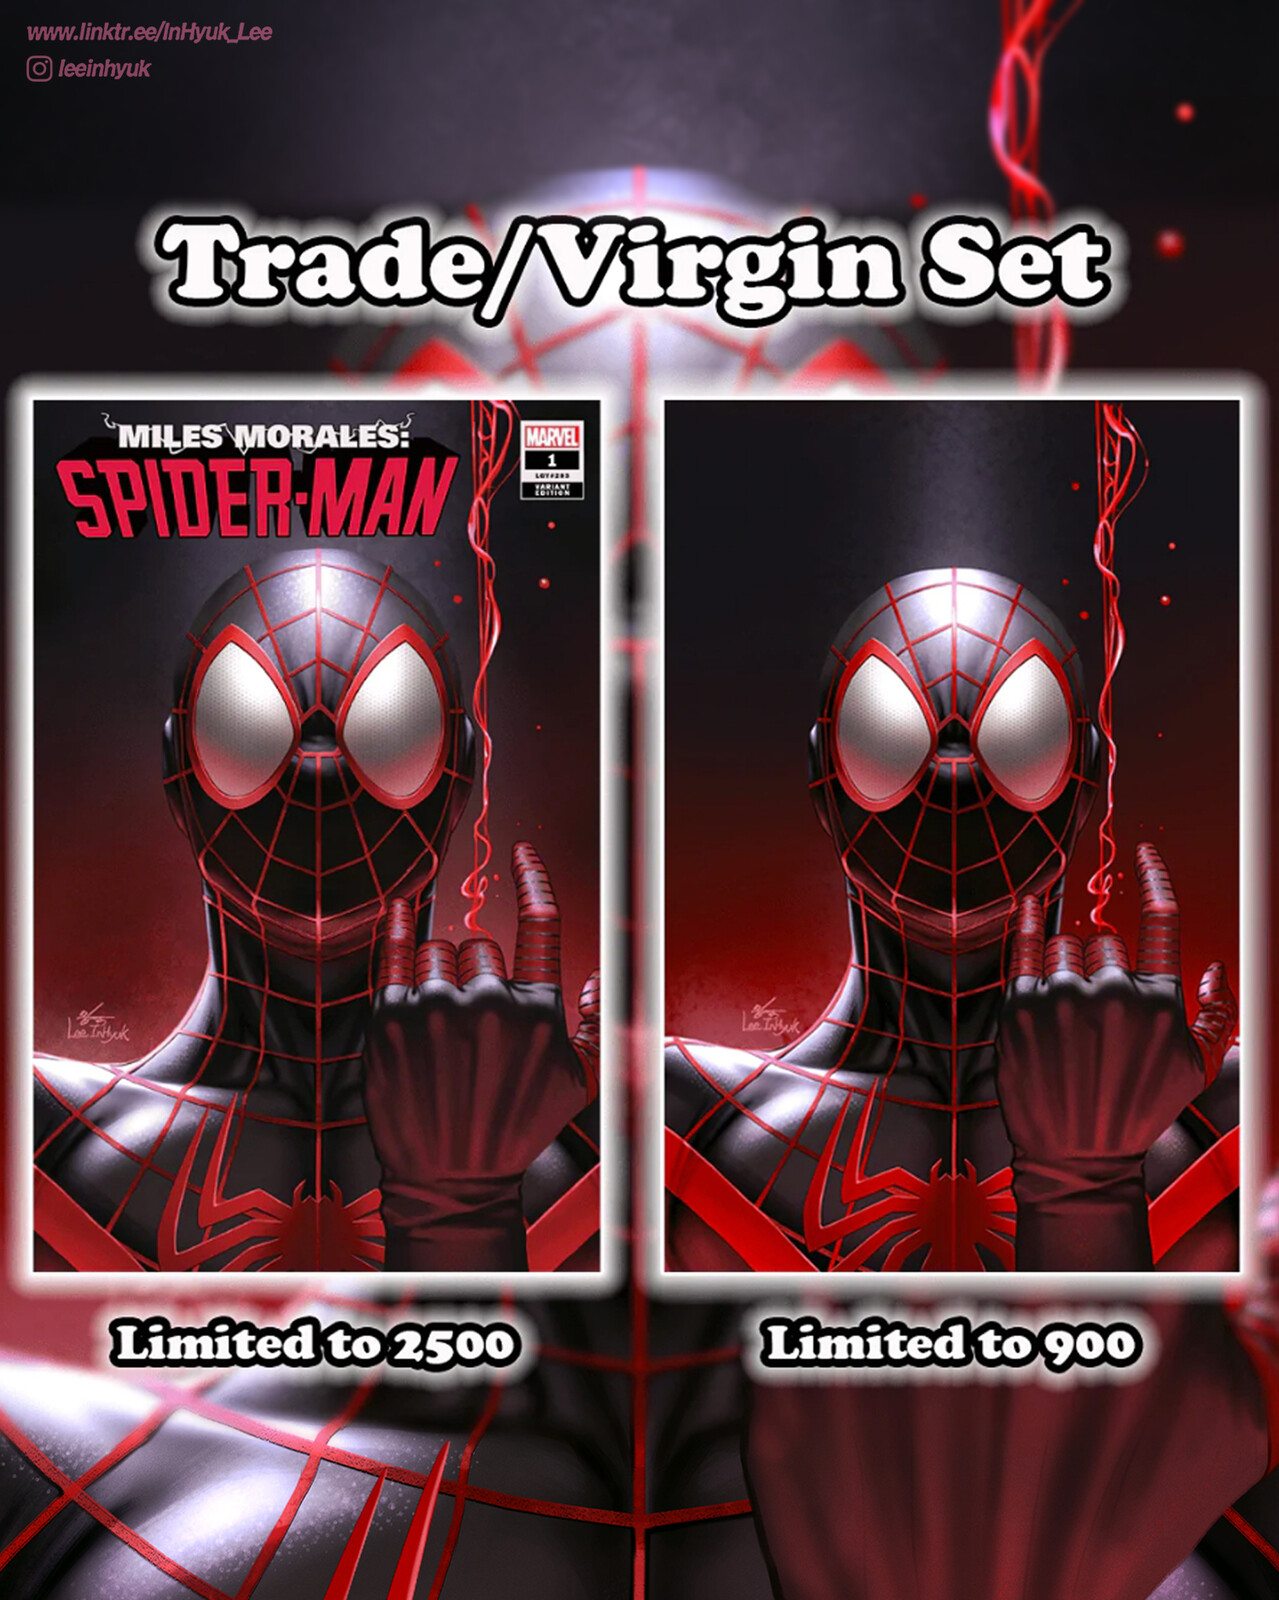 https://bryscomics.com/products/mile-morales-spider-man-1-choose-your-option-brys-comics-exclusive-pre-sale